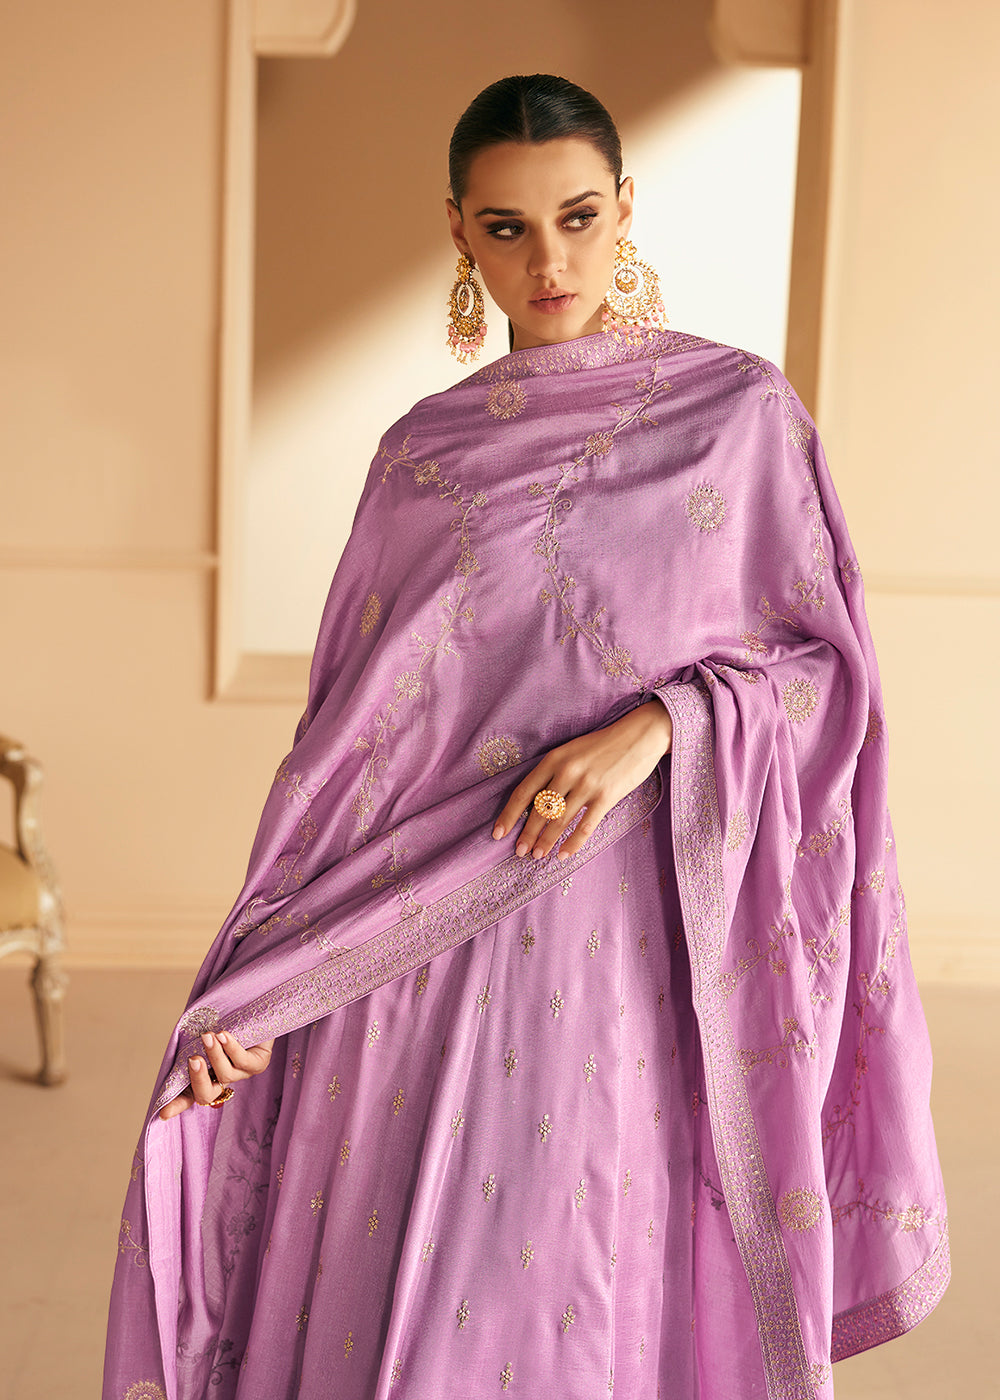 Buy Now Embroidered Lavender Premium Silk Sangeet Wear Anarkali Suit Online in USA, UK, Australia, New Zealand, Canada & Worldwide at Empress Clothing. 